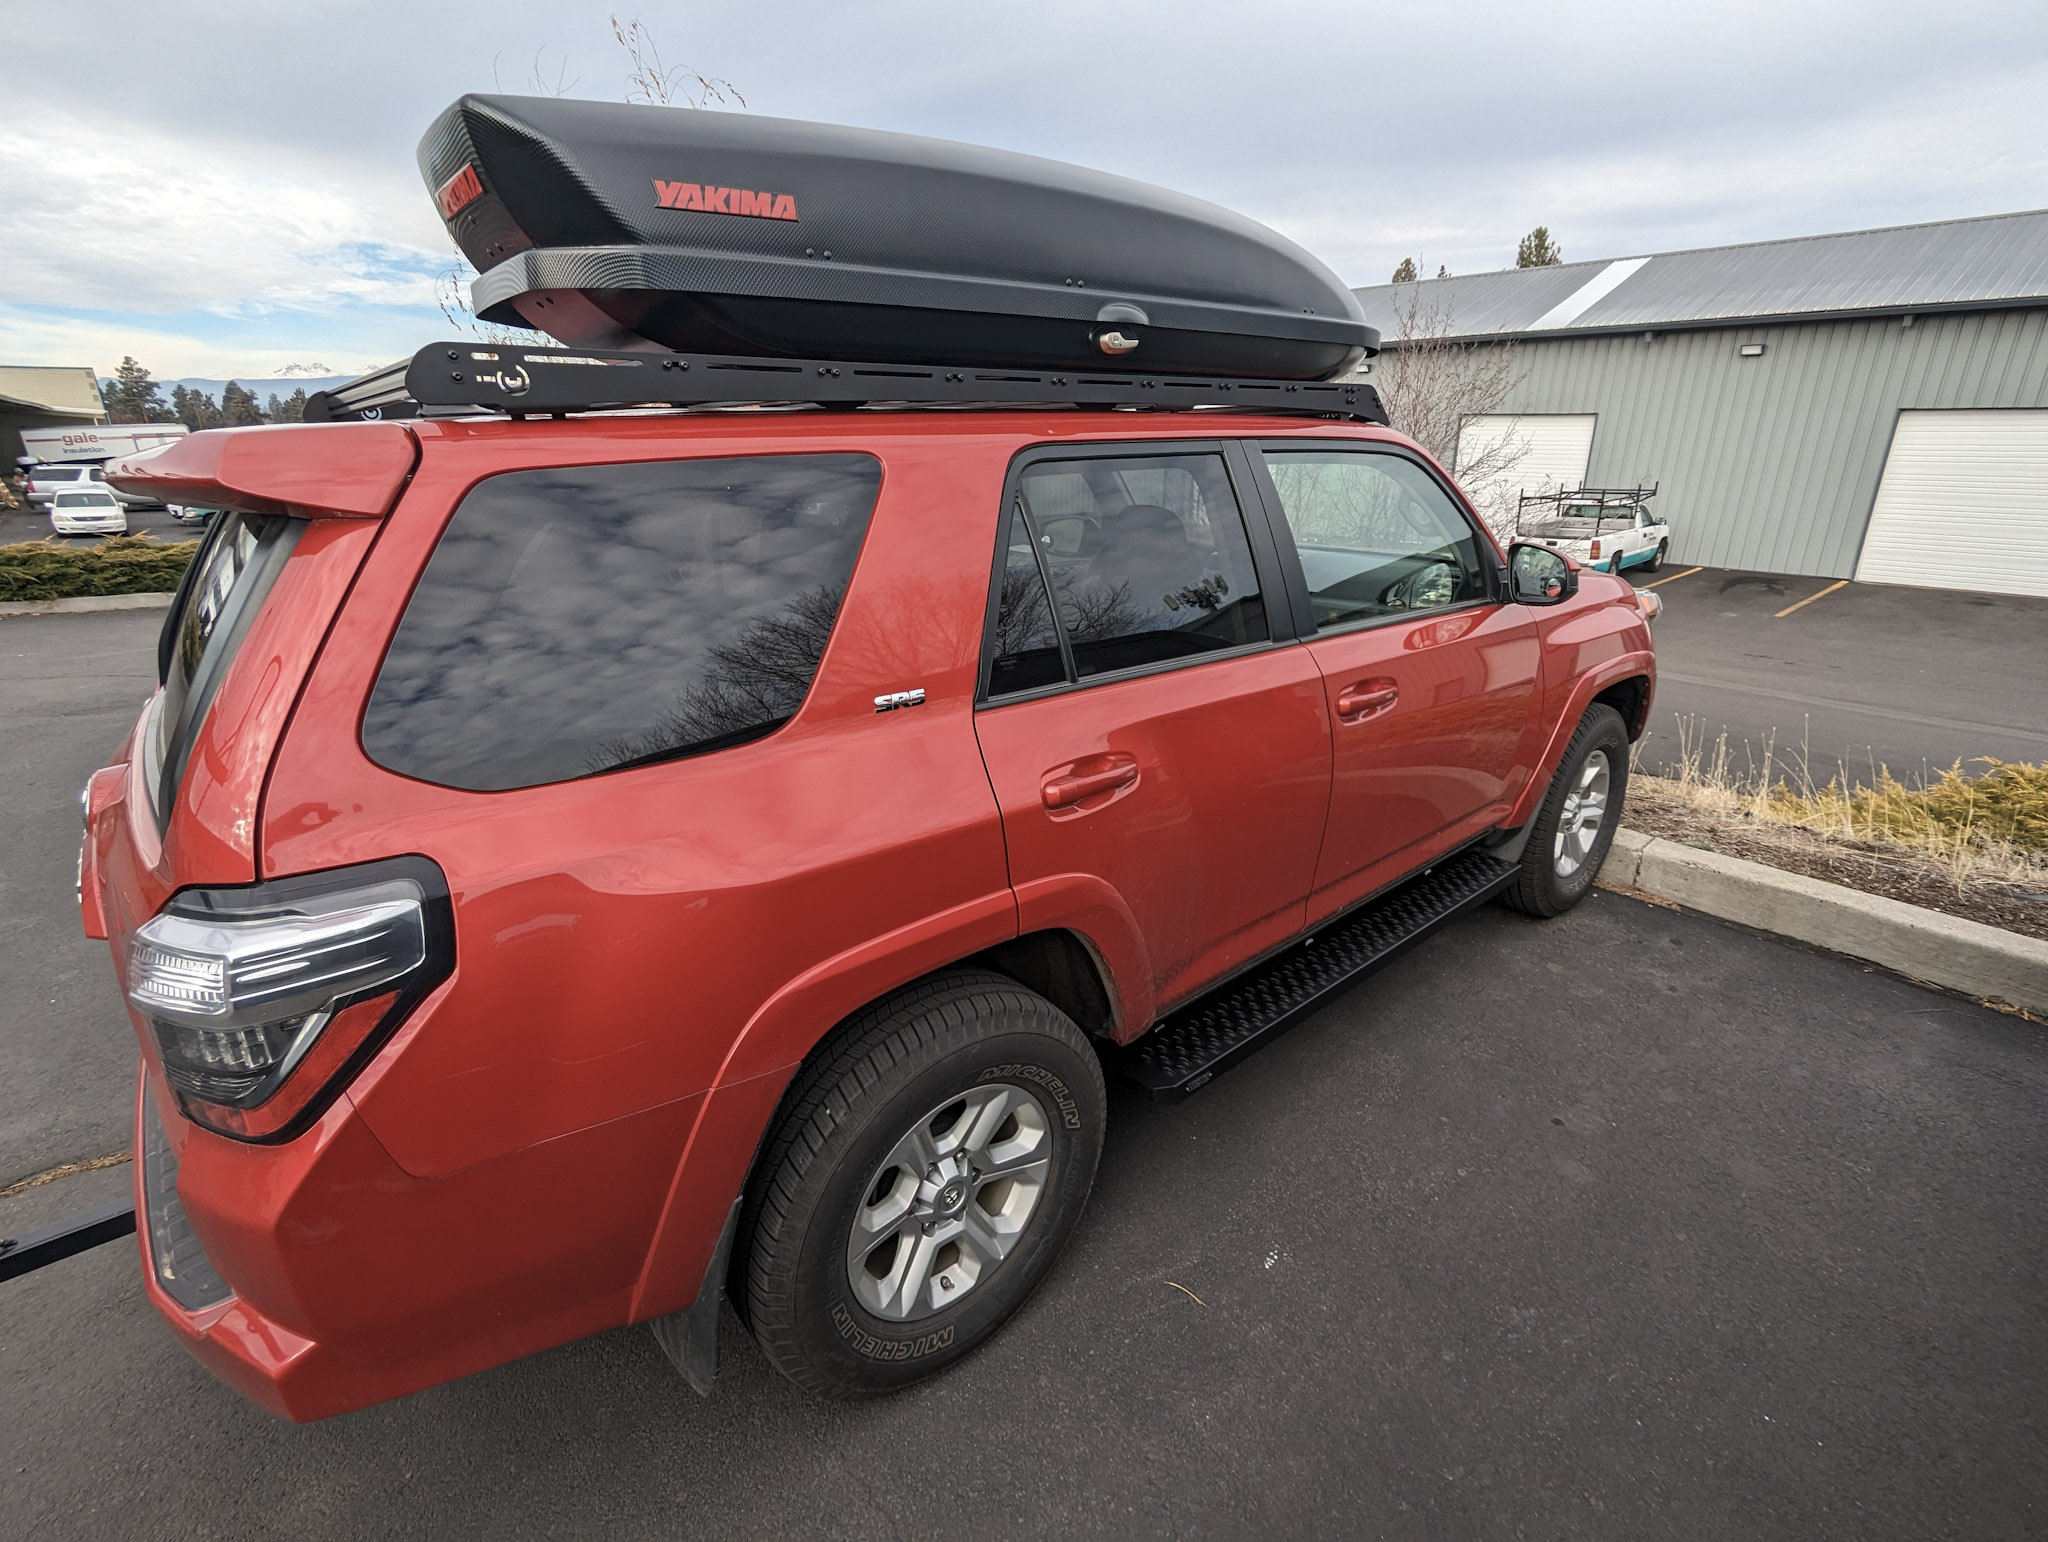 2015 Toyota 4Runner - Roof Rack, Cargo Box, and Side Steps - Prinsu, Yakima, Westin